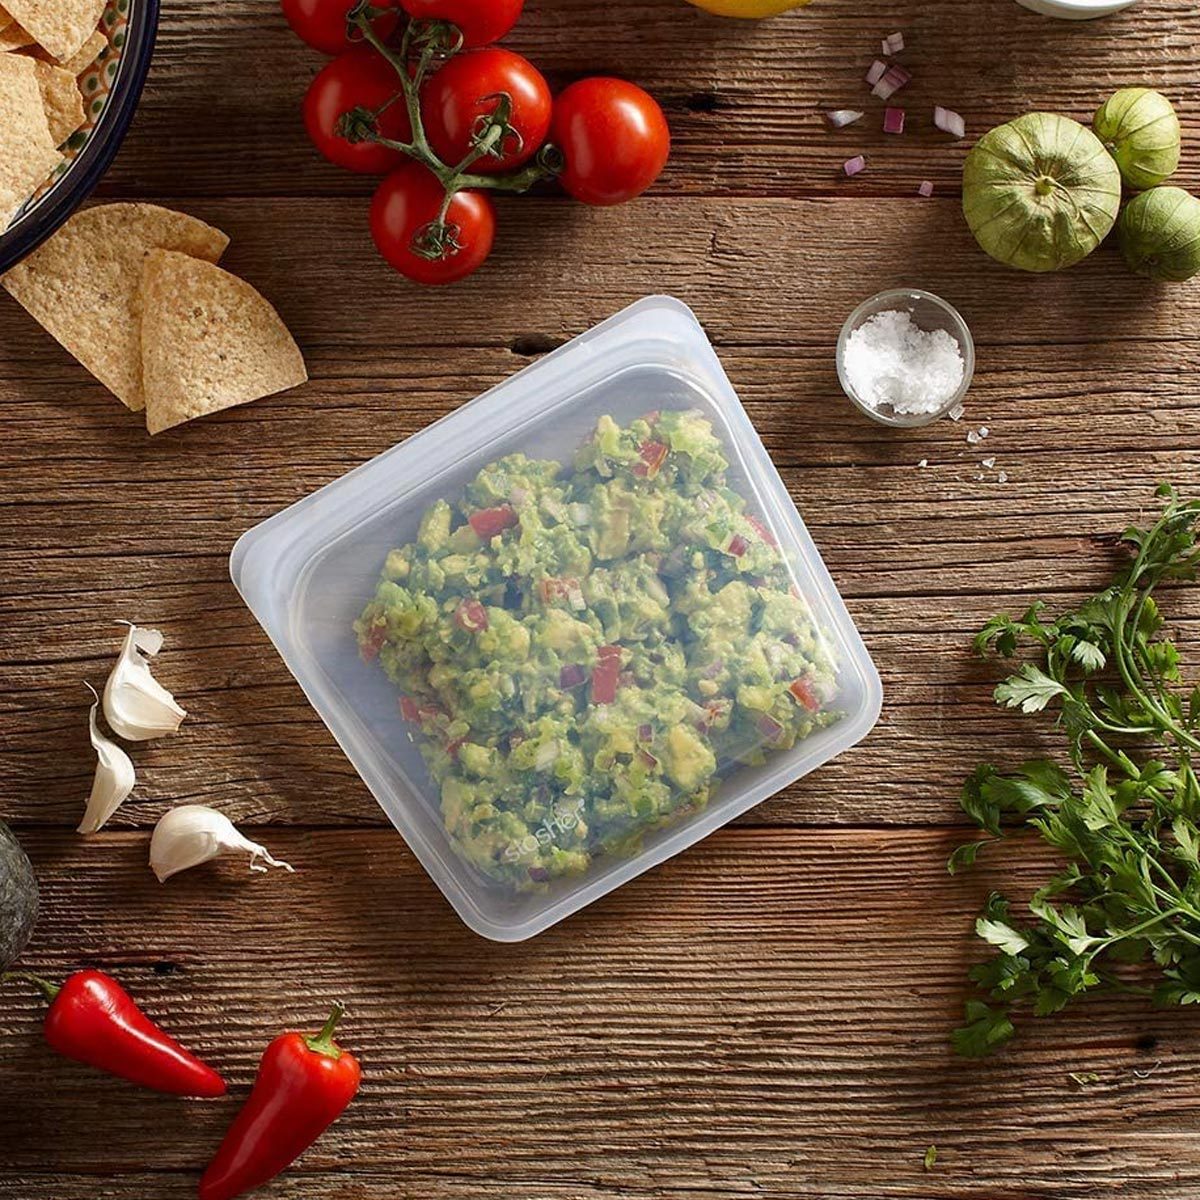 M MCIRCO Glass Salad Bowls with Lids-14-Piece Set, Salad Bowls with Lids,  Space Saving Nesting Bowls - for Meal Prep, Food Storage, Serving Bowls